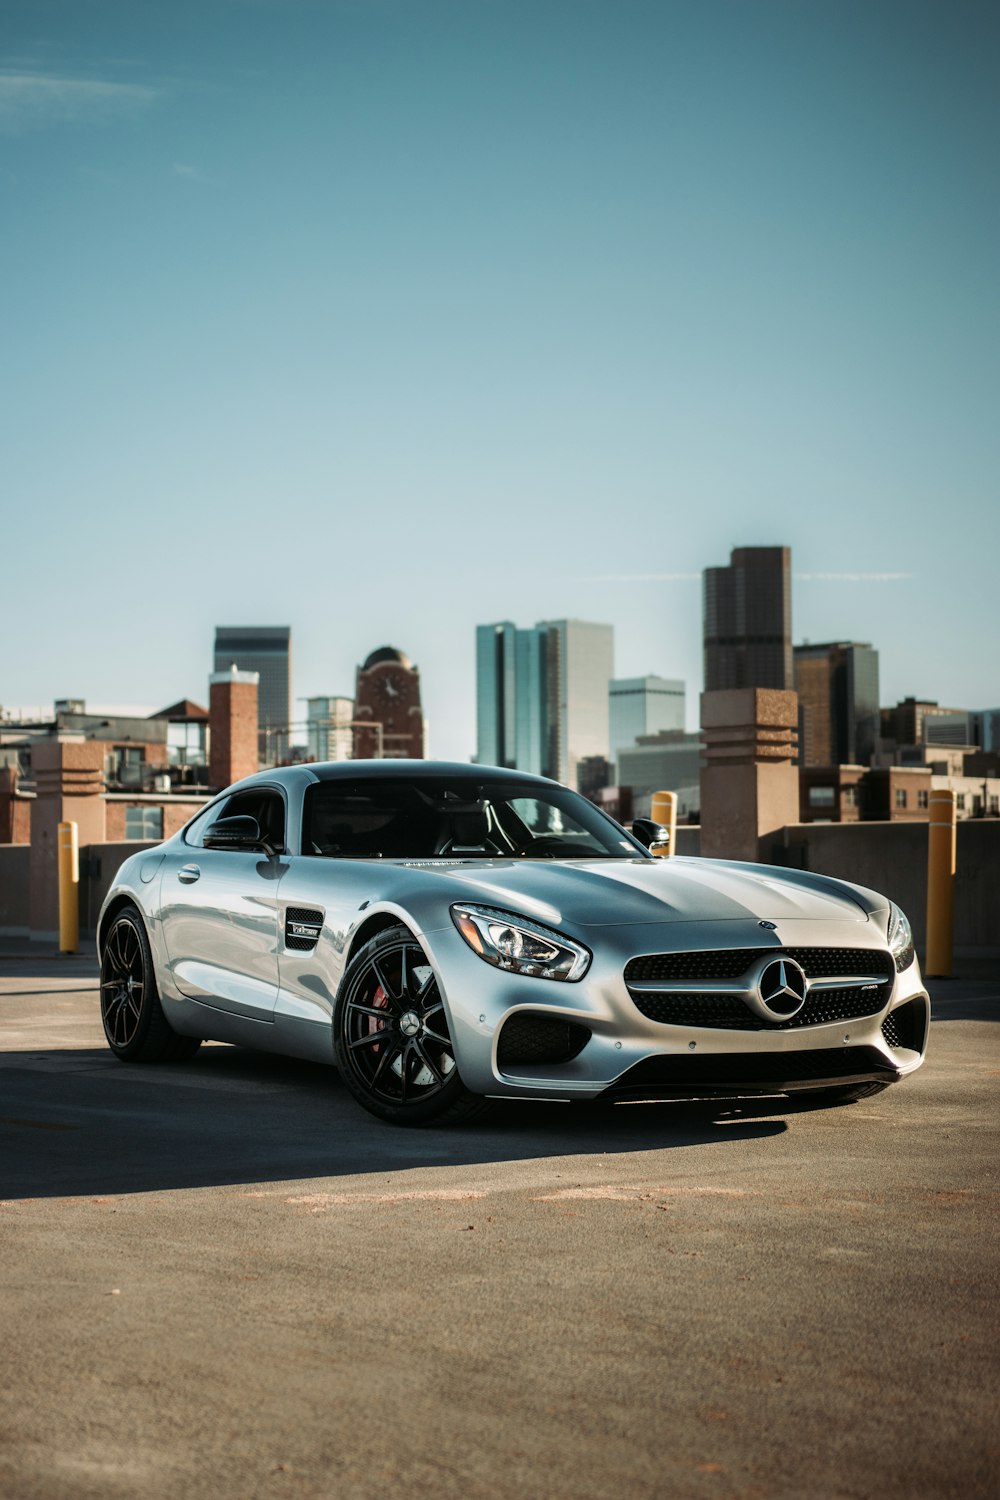 500+ Mercedes Benz Pictures | Download Free Images on Unsplash